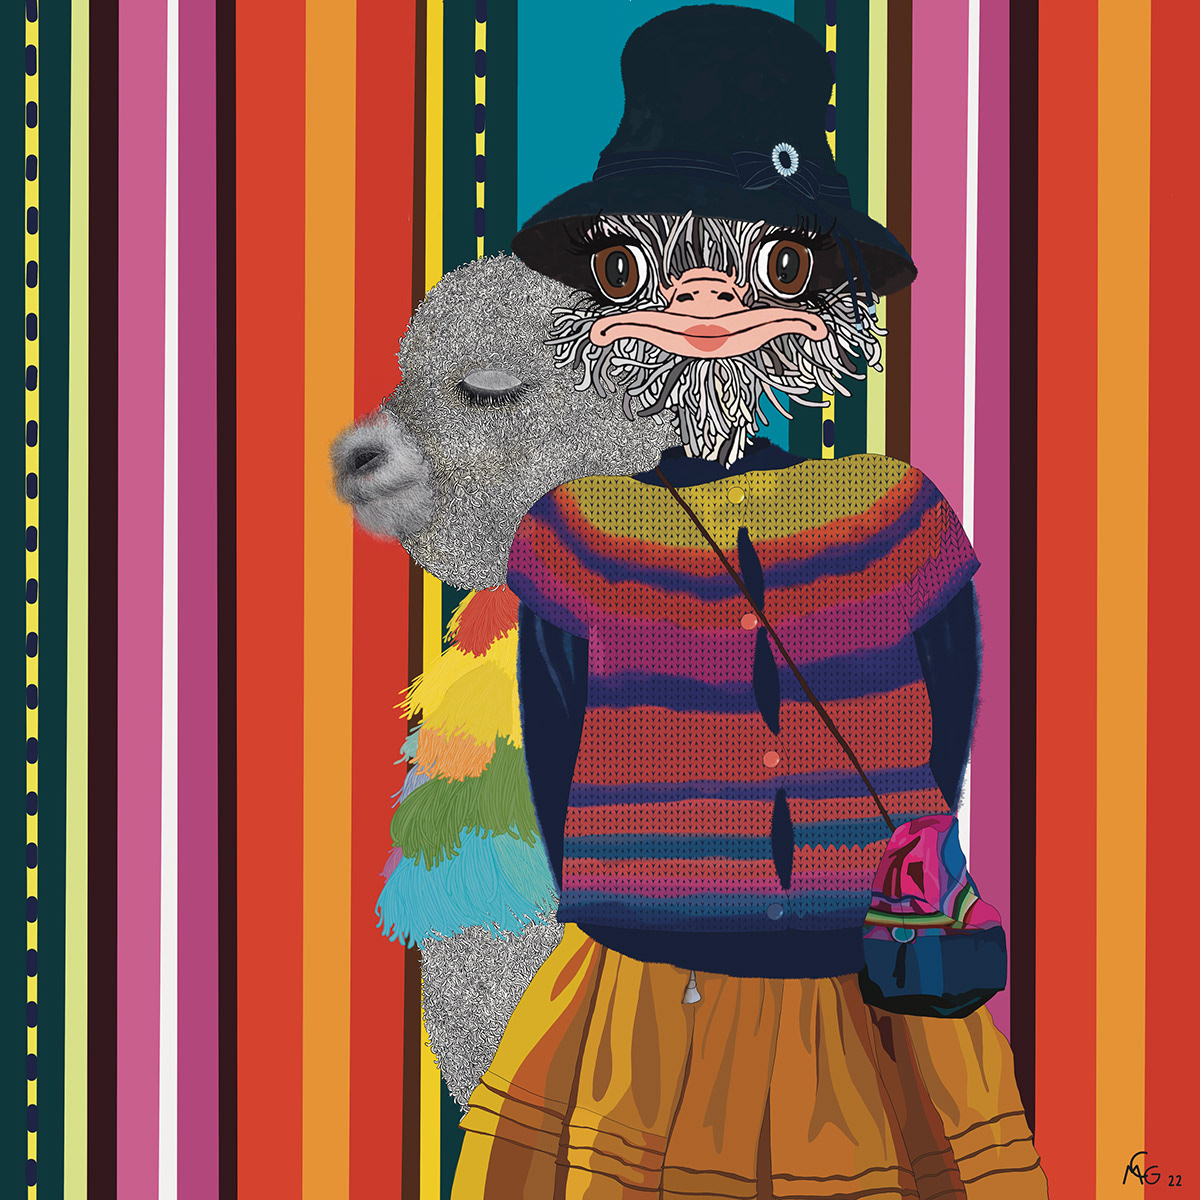 Digital Art  digital illustration арт artist concept art ostrich Procreate bolivia friend alpaga digital or